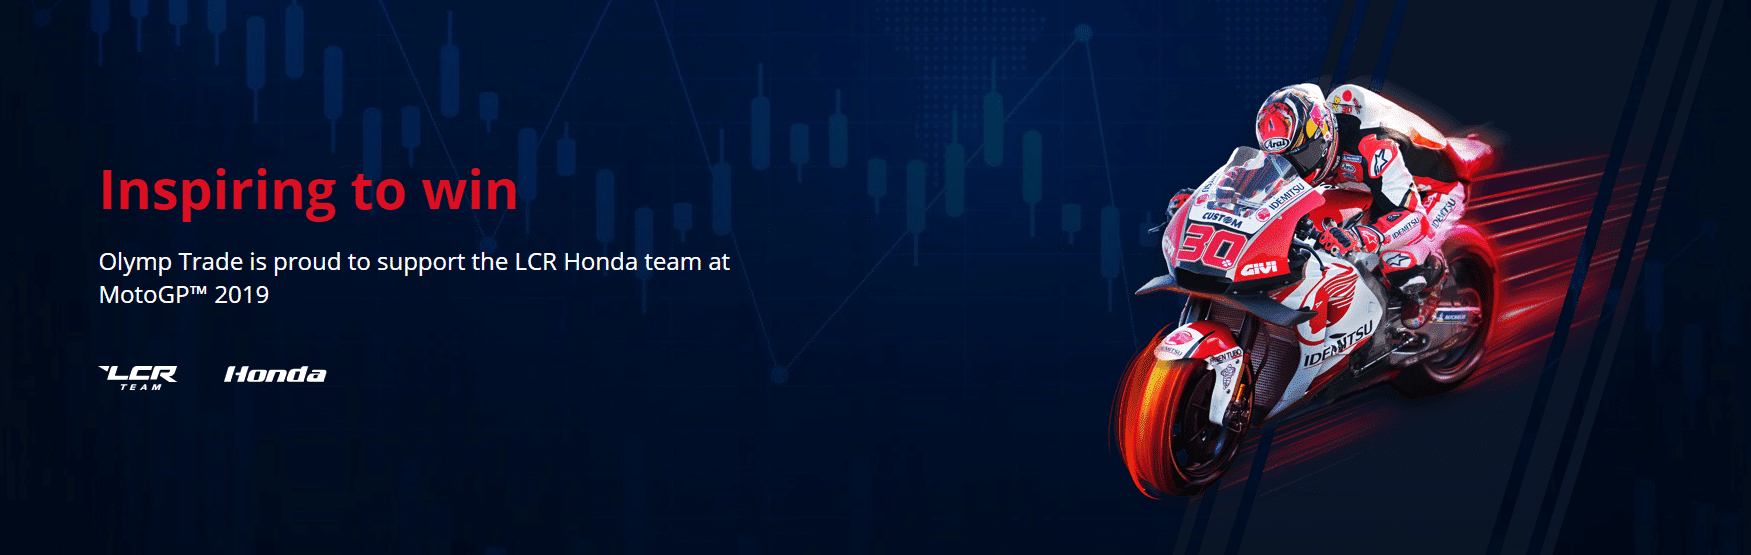 Olymp Trade is a sponsor of the LCR Honda team at MotoGP in 2019